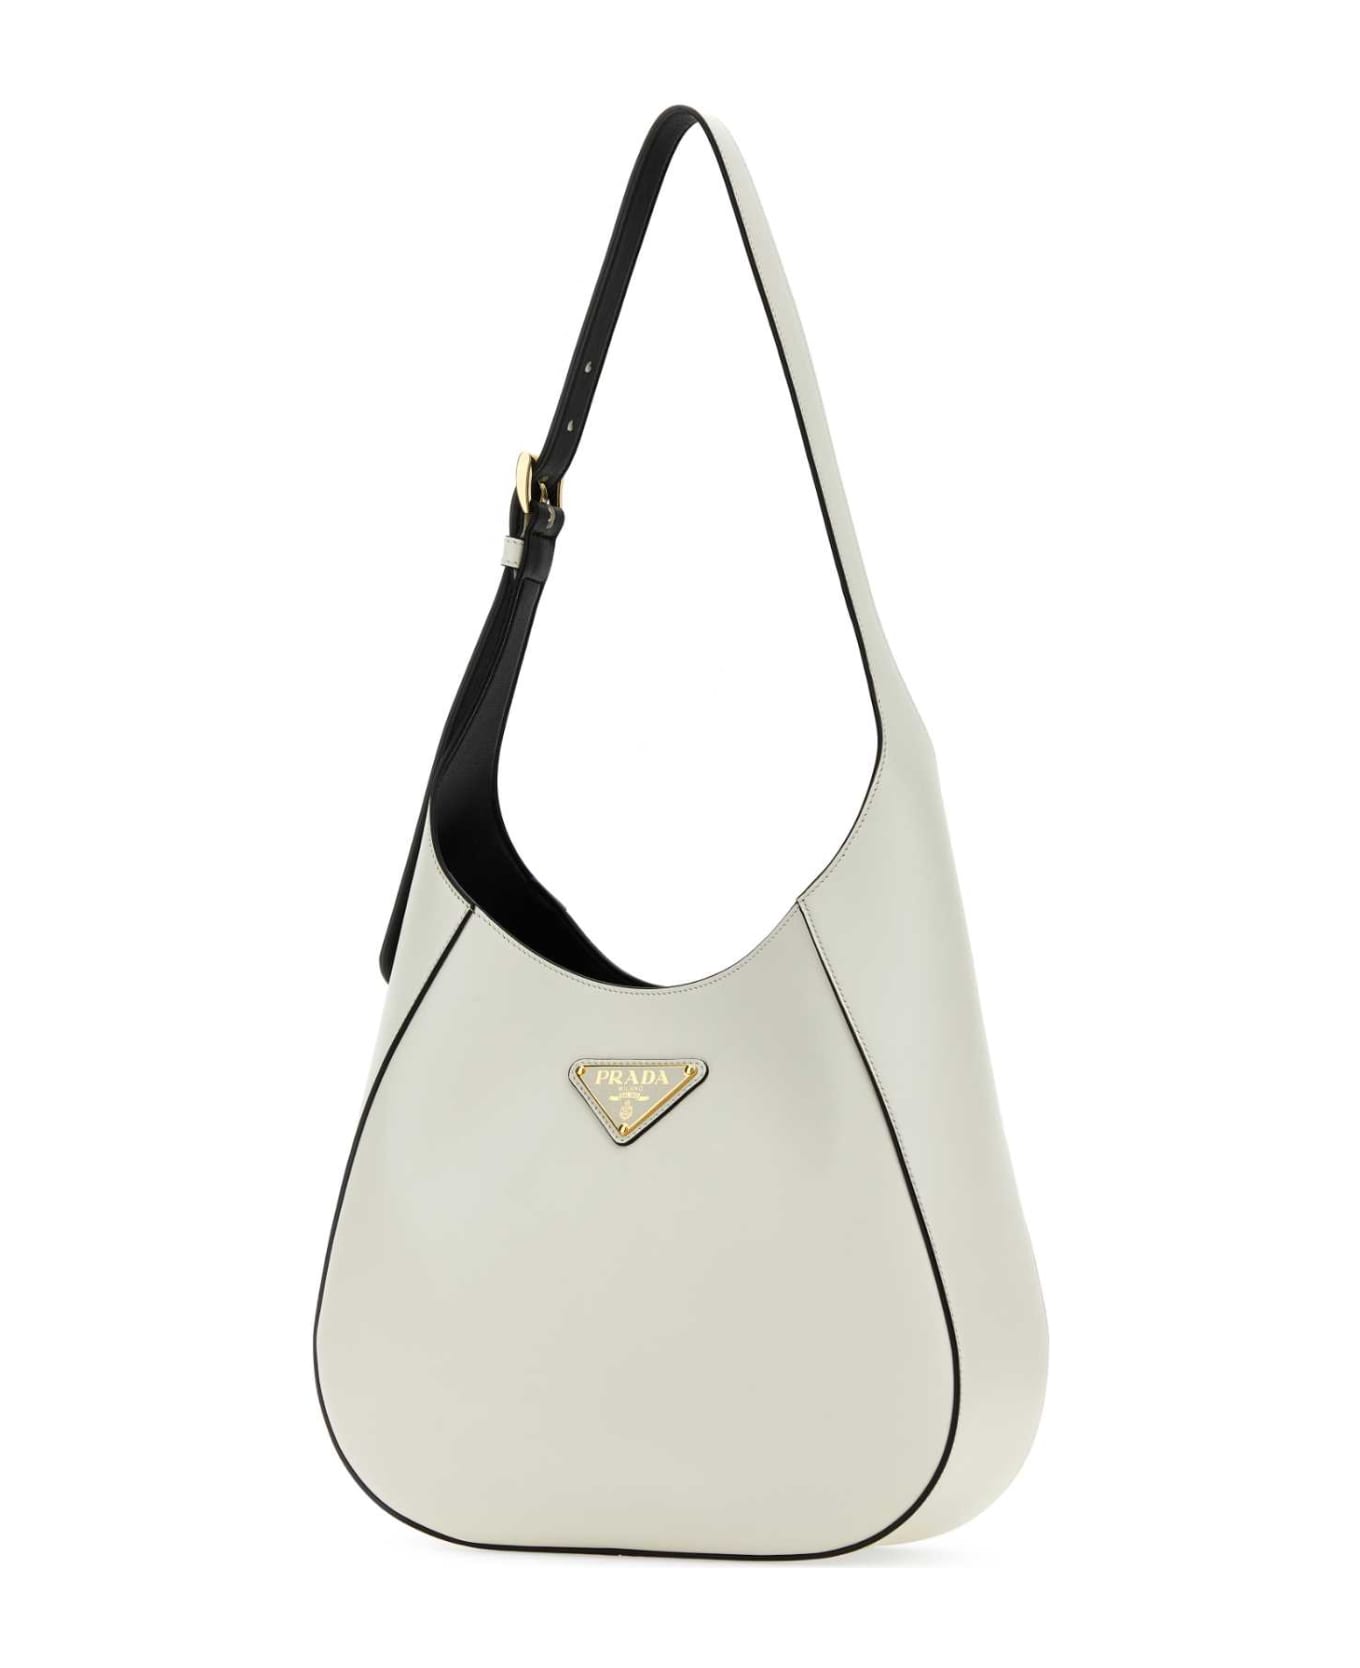 Prada White Leather Shoulder Bag - BIANCONERO